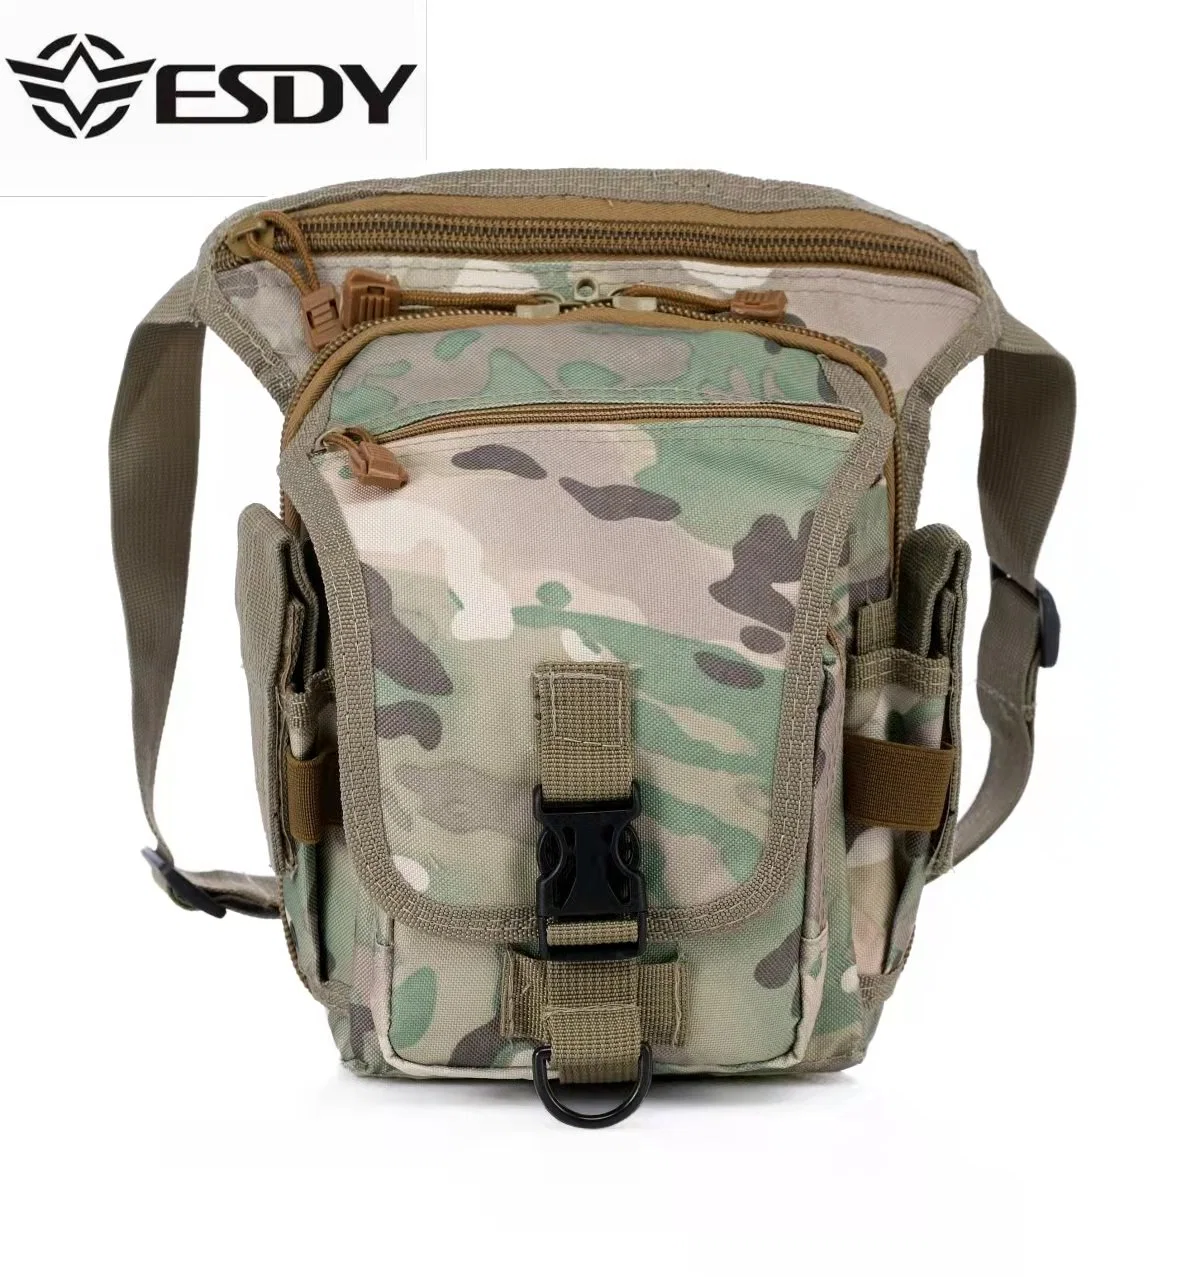 Esdy Tactical Leg Bag for Men Riding Lightweight Multi-Functional Leg Bag